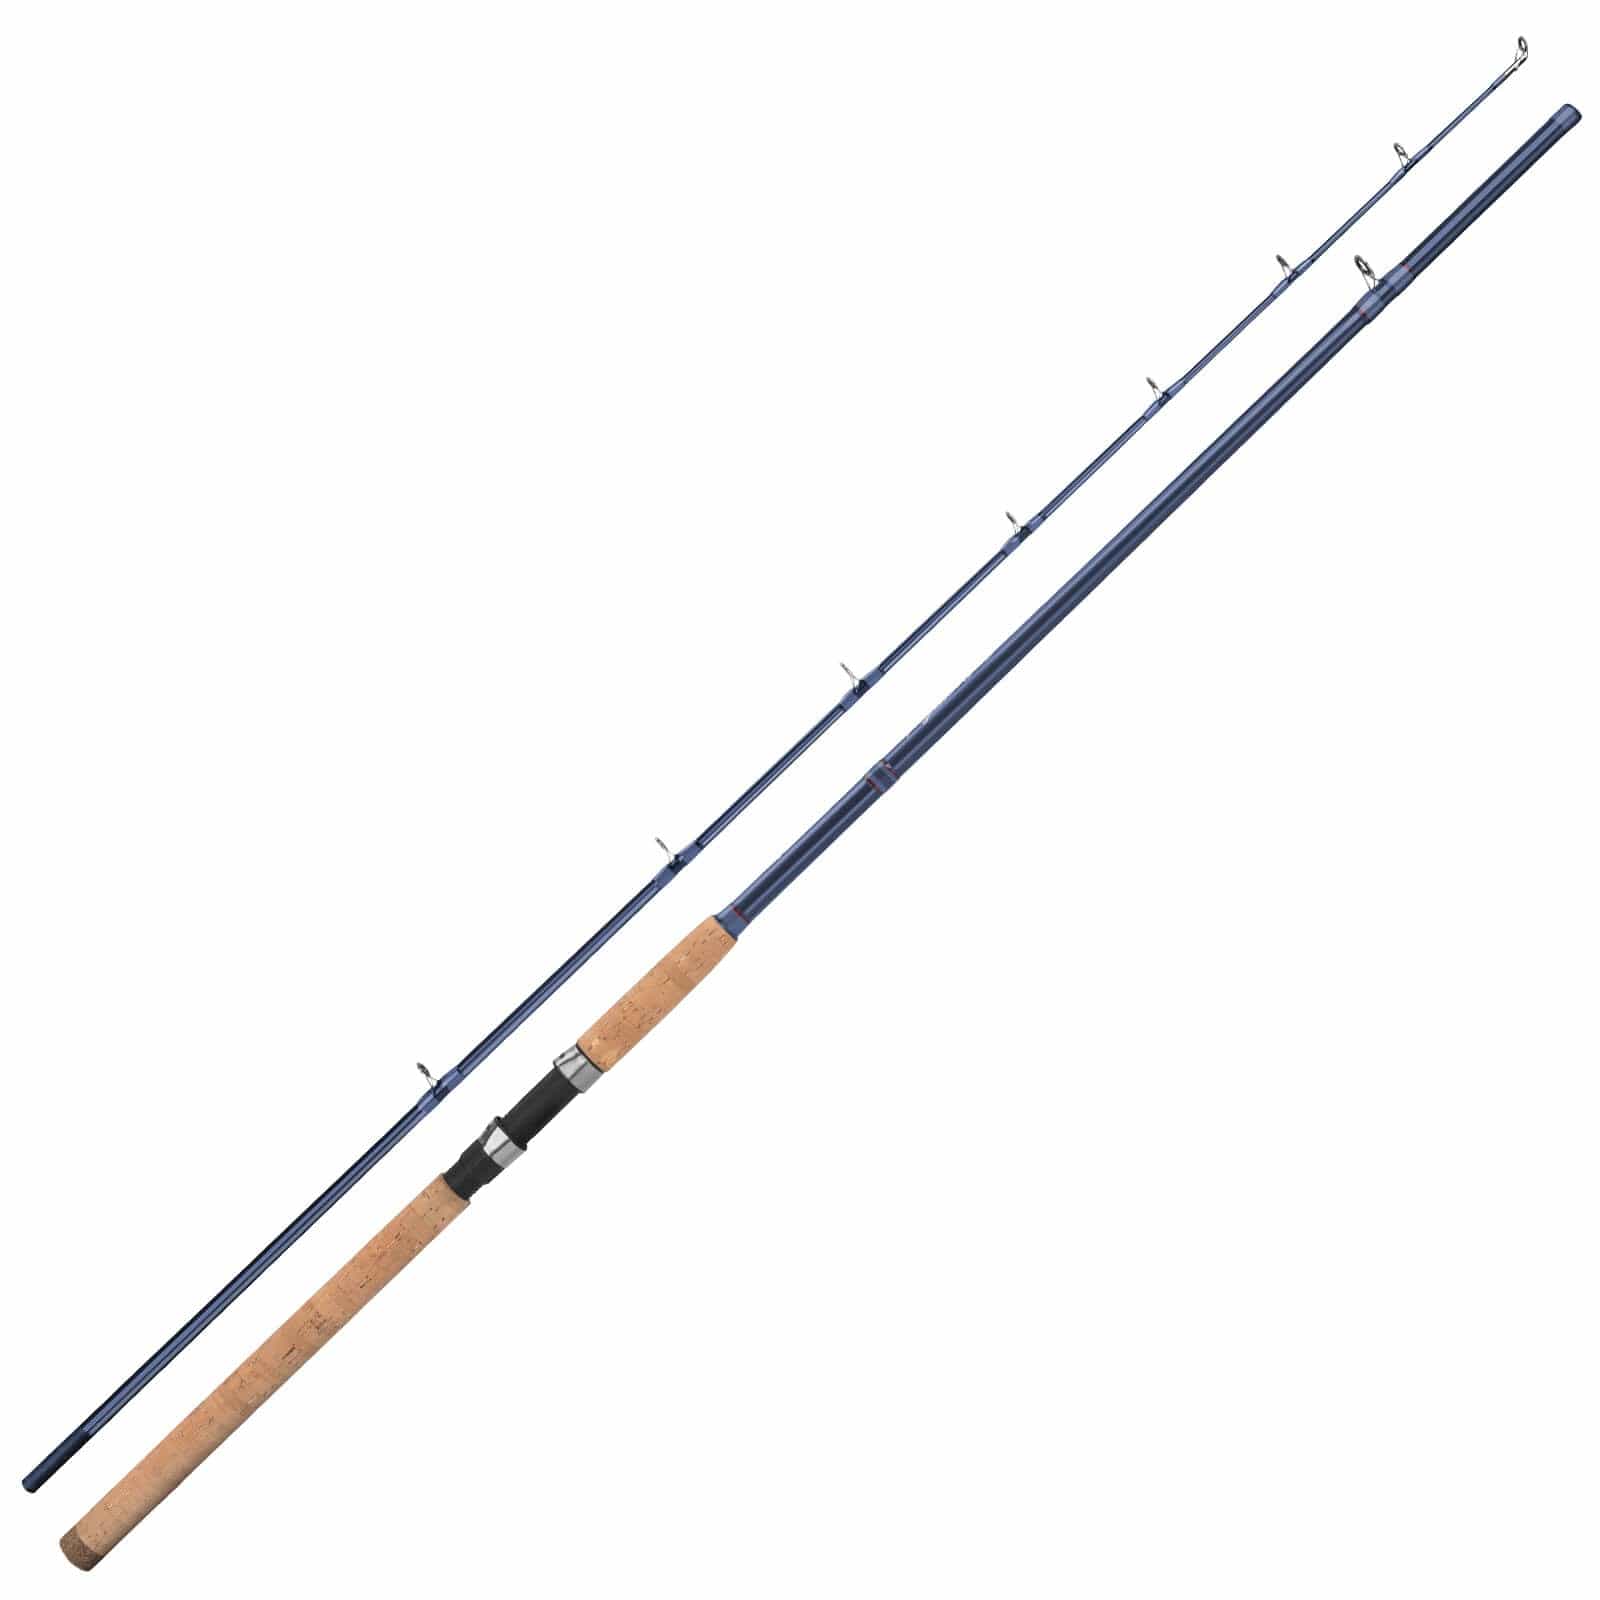 Vintage Major Brand 5’6” Glass 1-pc Spinning Fishing Rod fiberglass